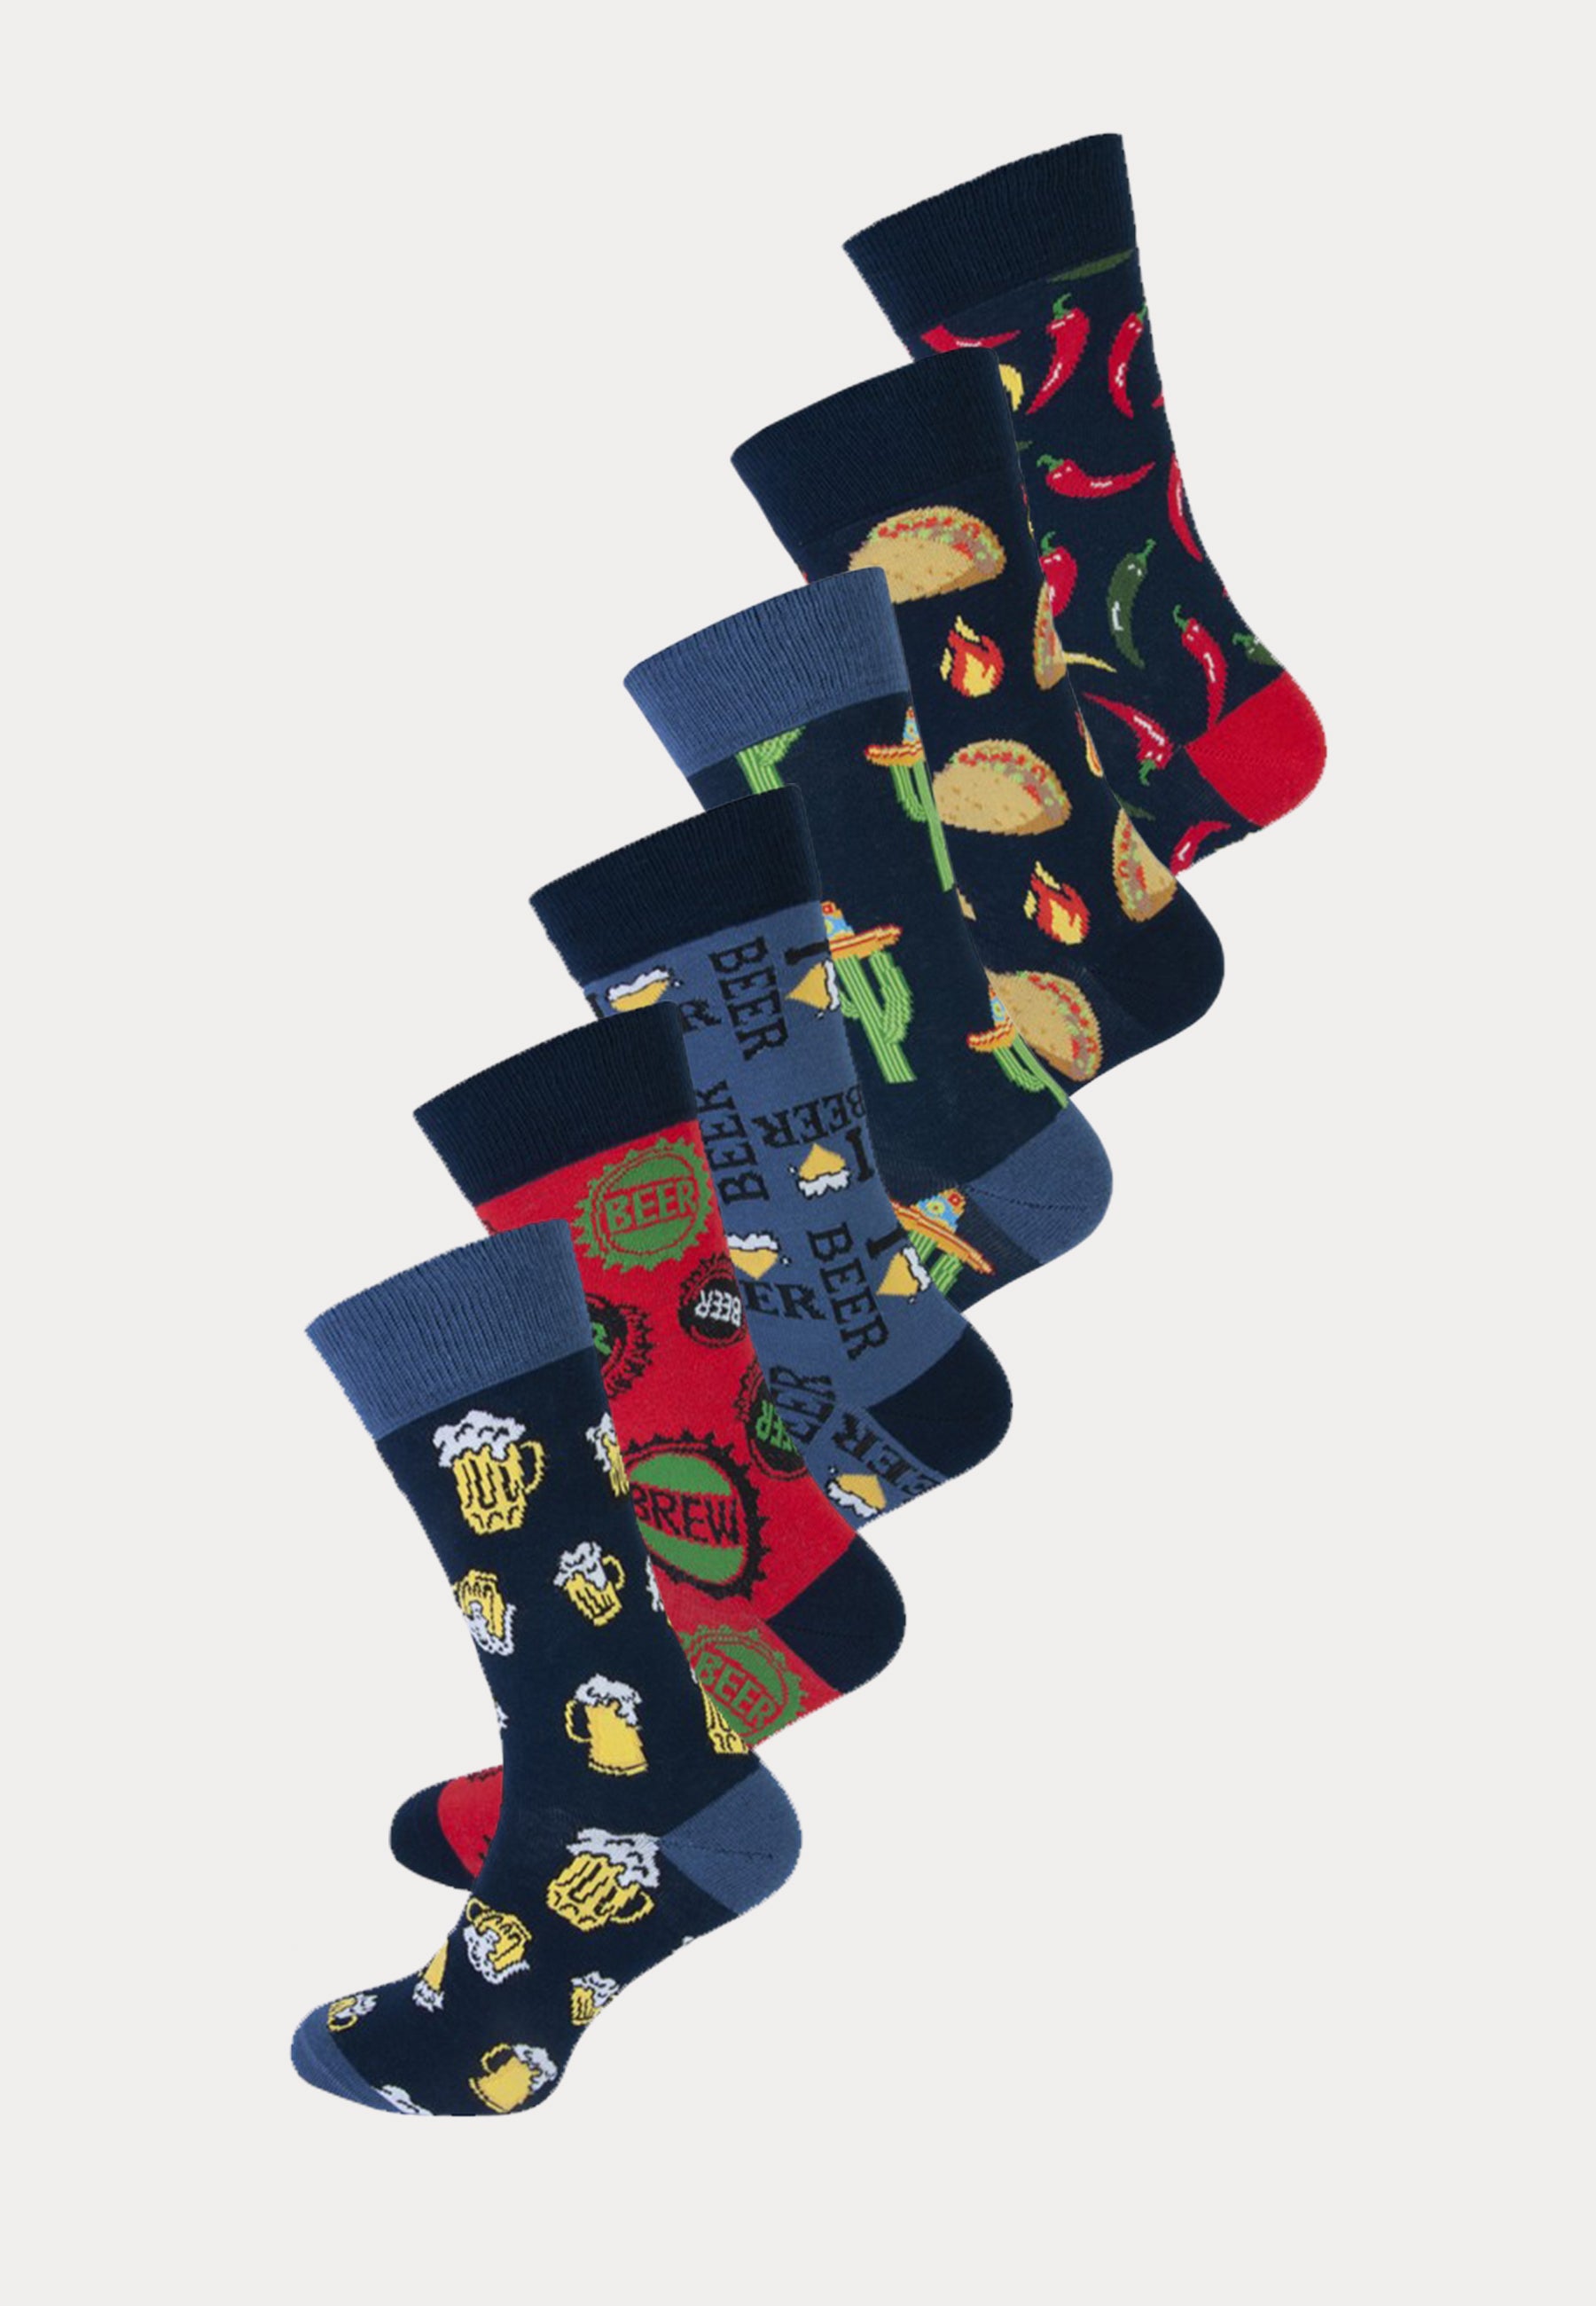 6 paar fashion socks met print van eten van het merk Teckel